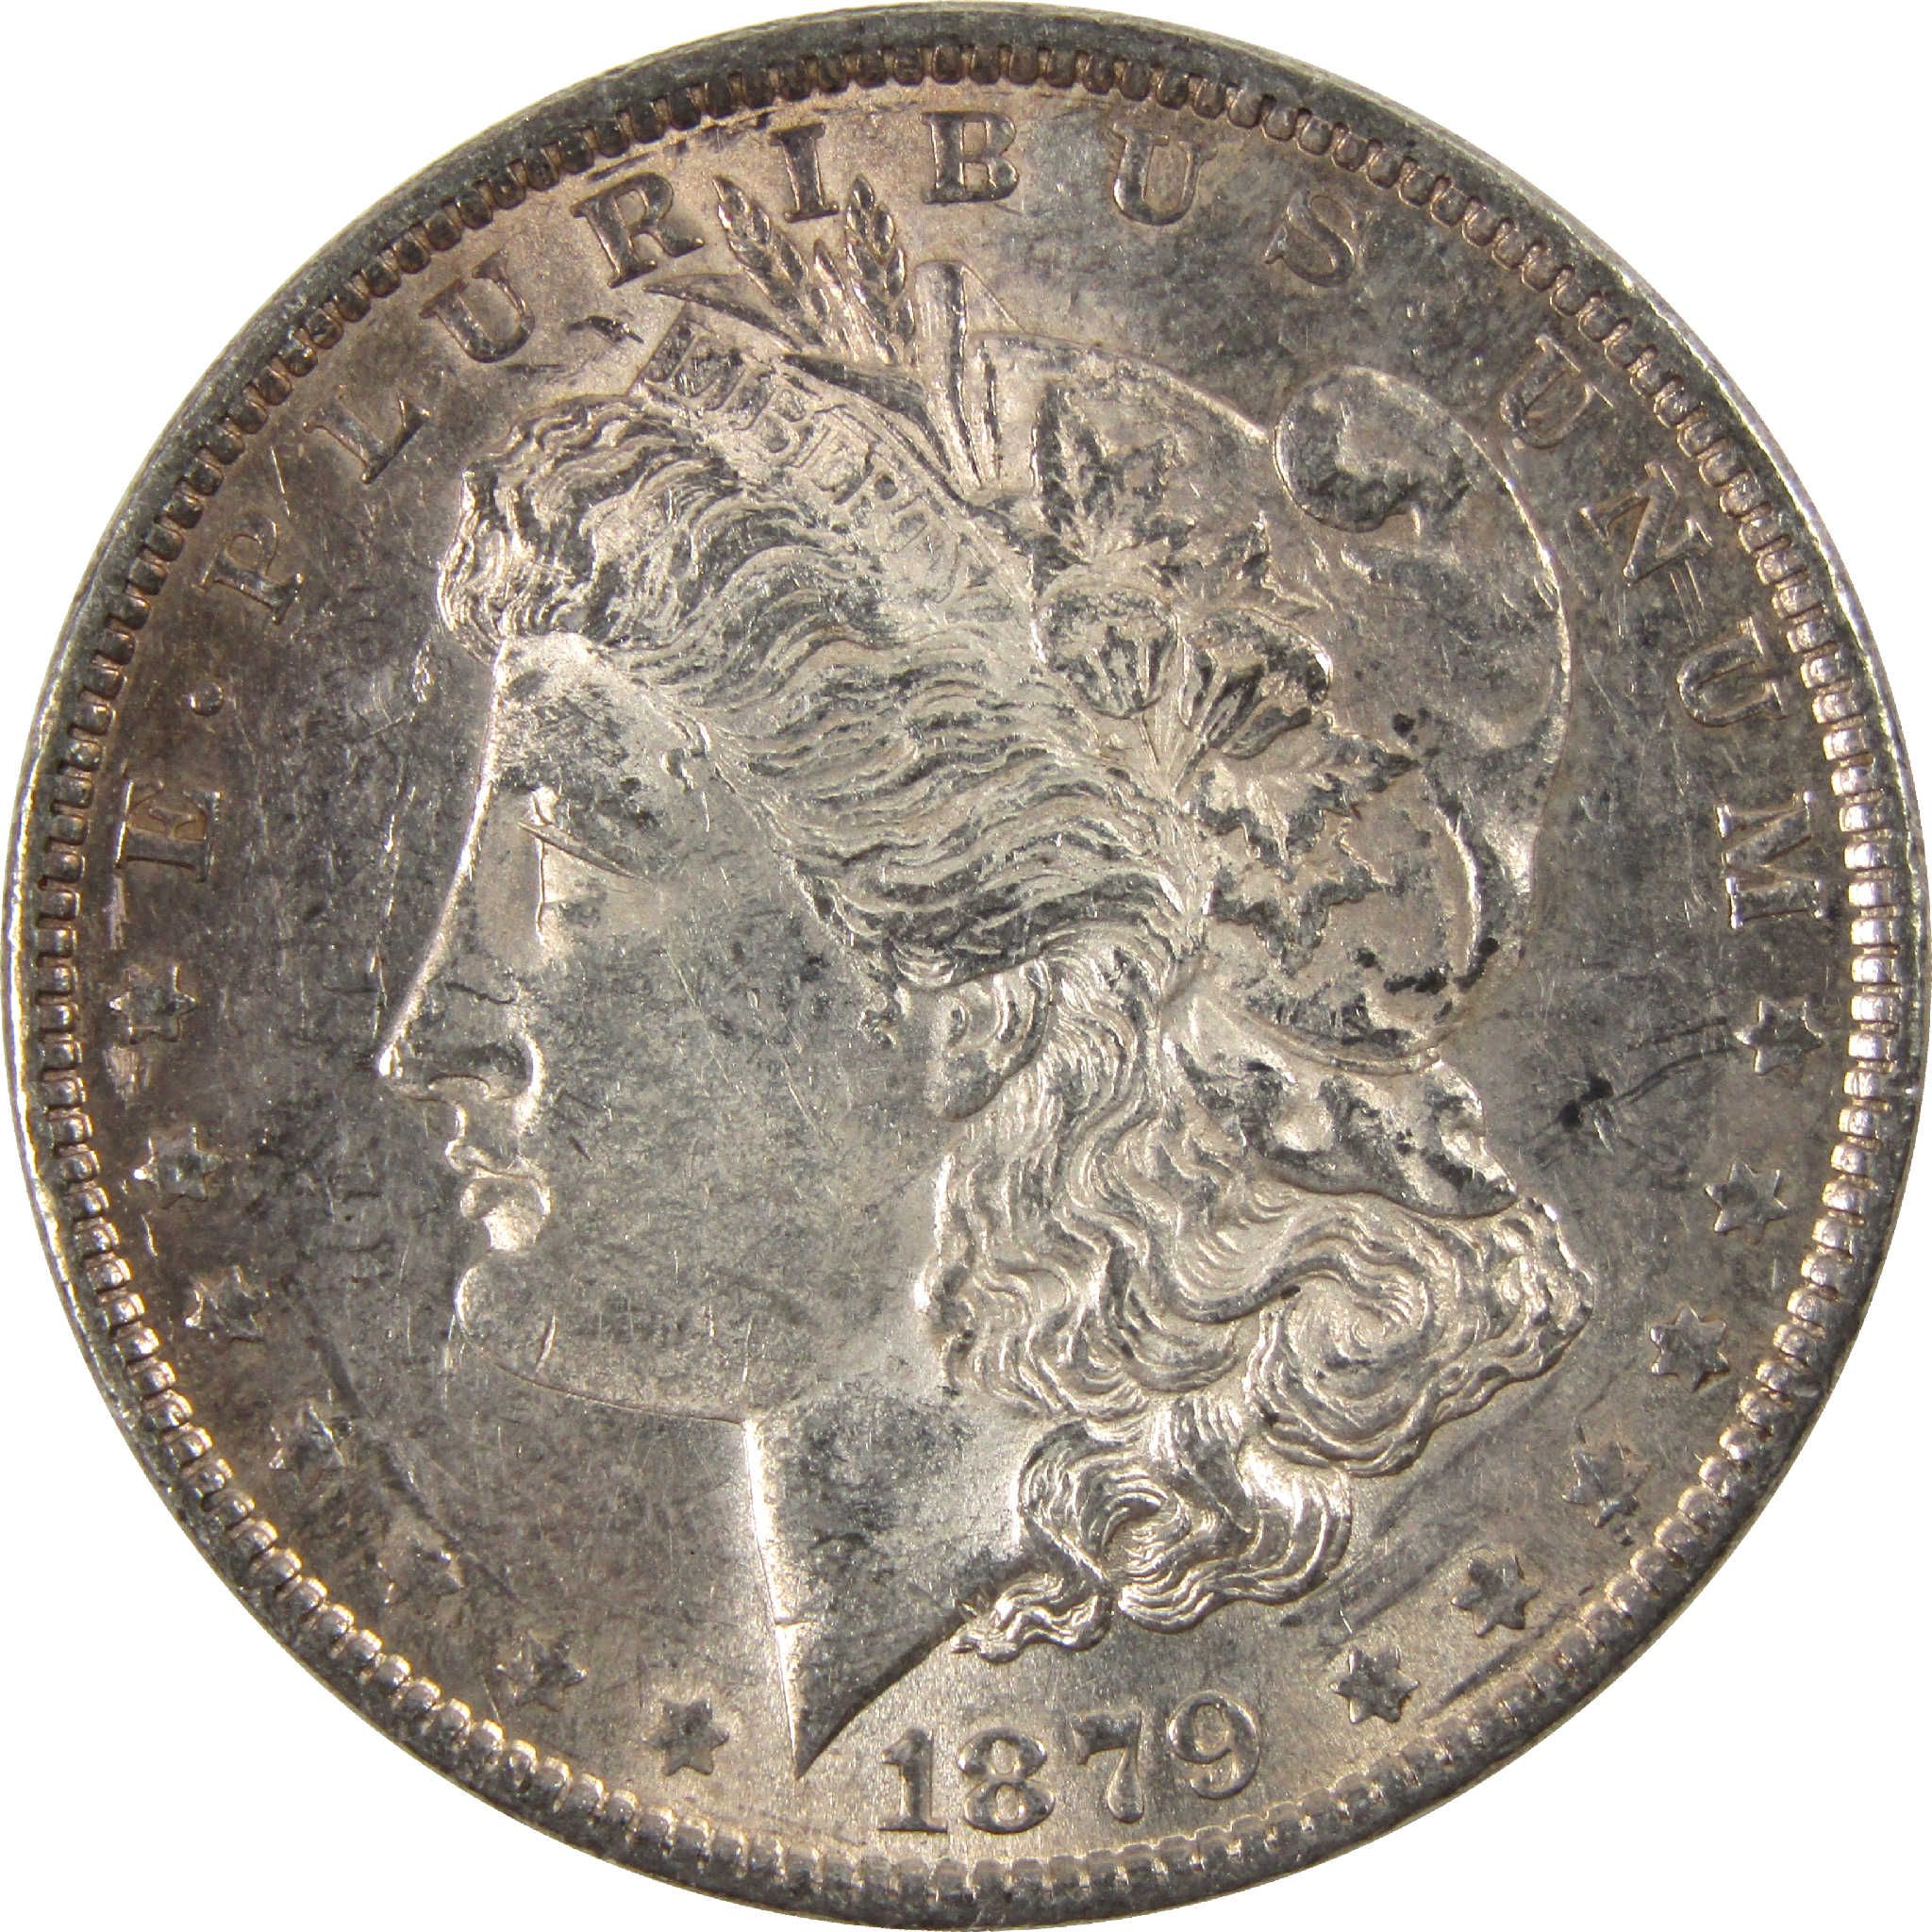 1879 Morgan Dollar CH AU Choice About Uncirculated Silver $1 Coin - Morgan coin - Morgan silver dollar - Morgan silver dollar for sale - Profile Coins &amp; Collectibles